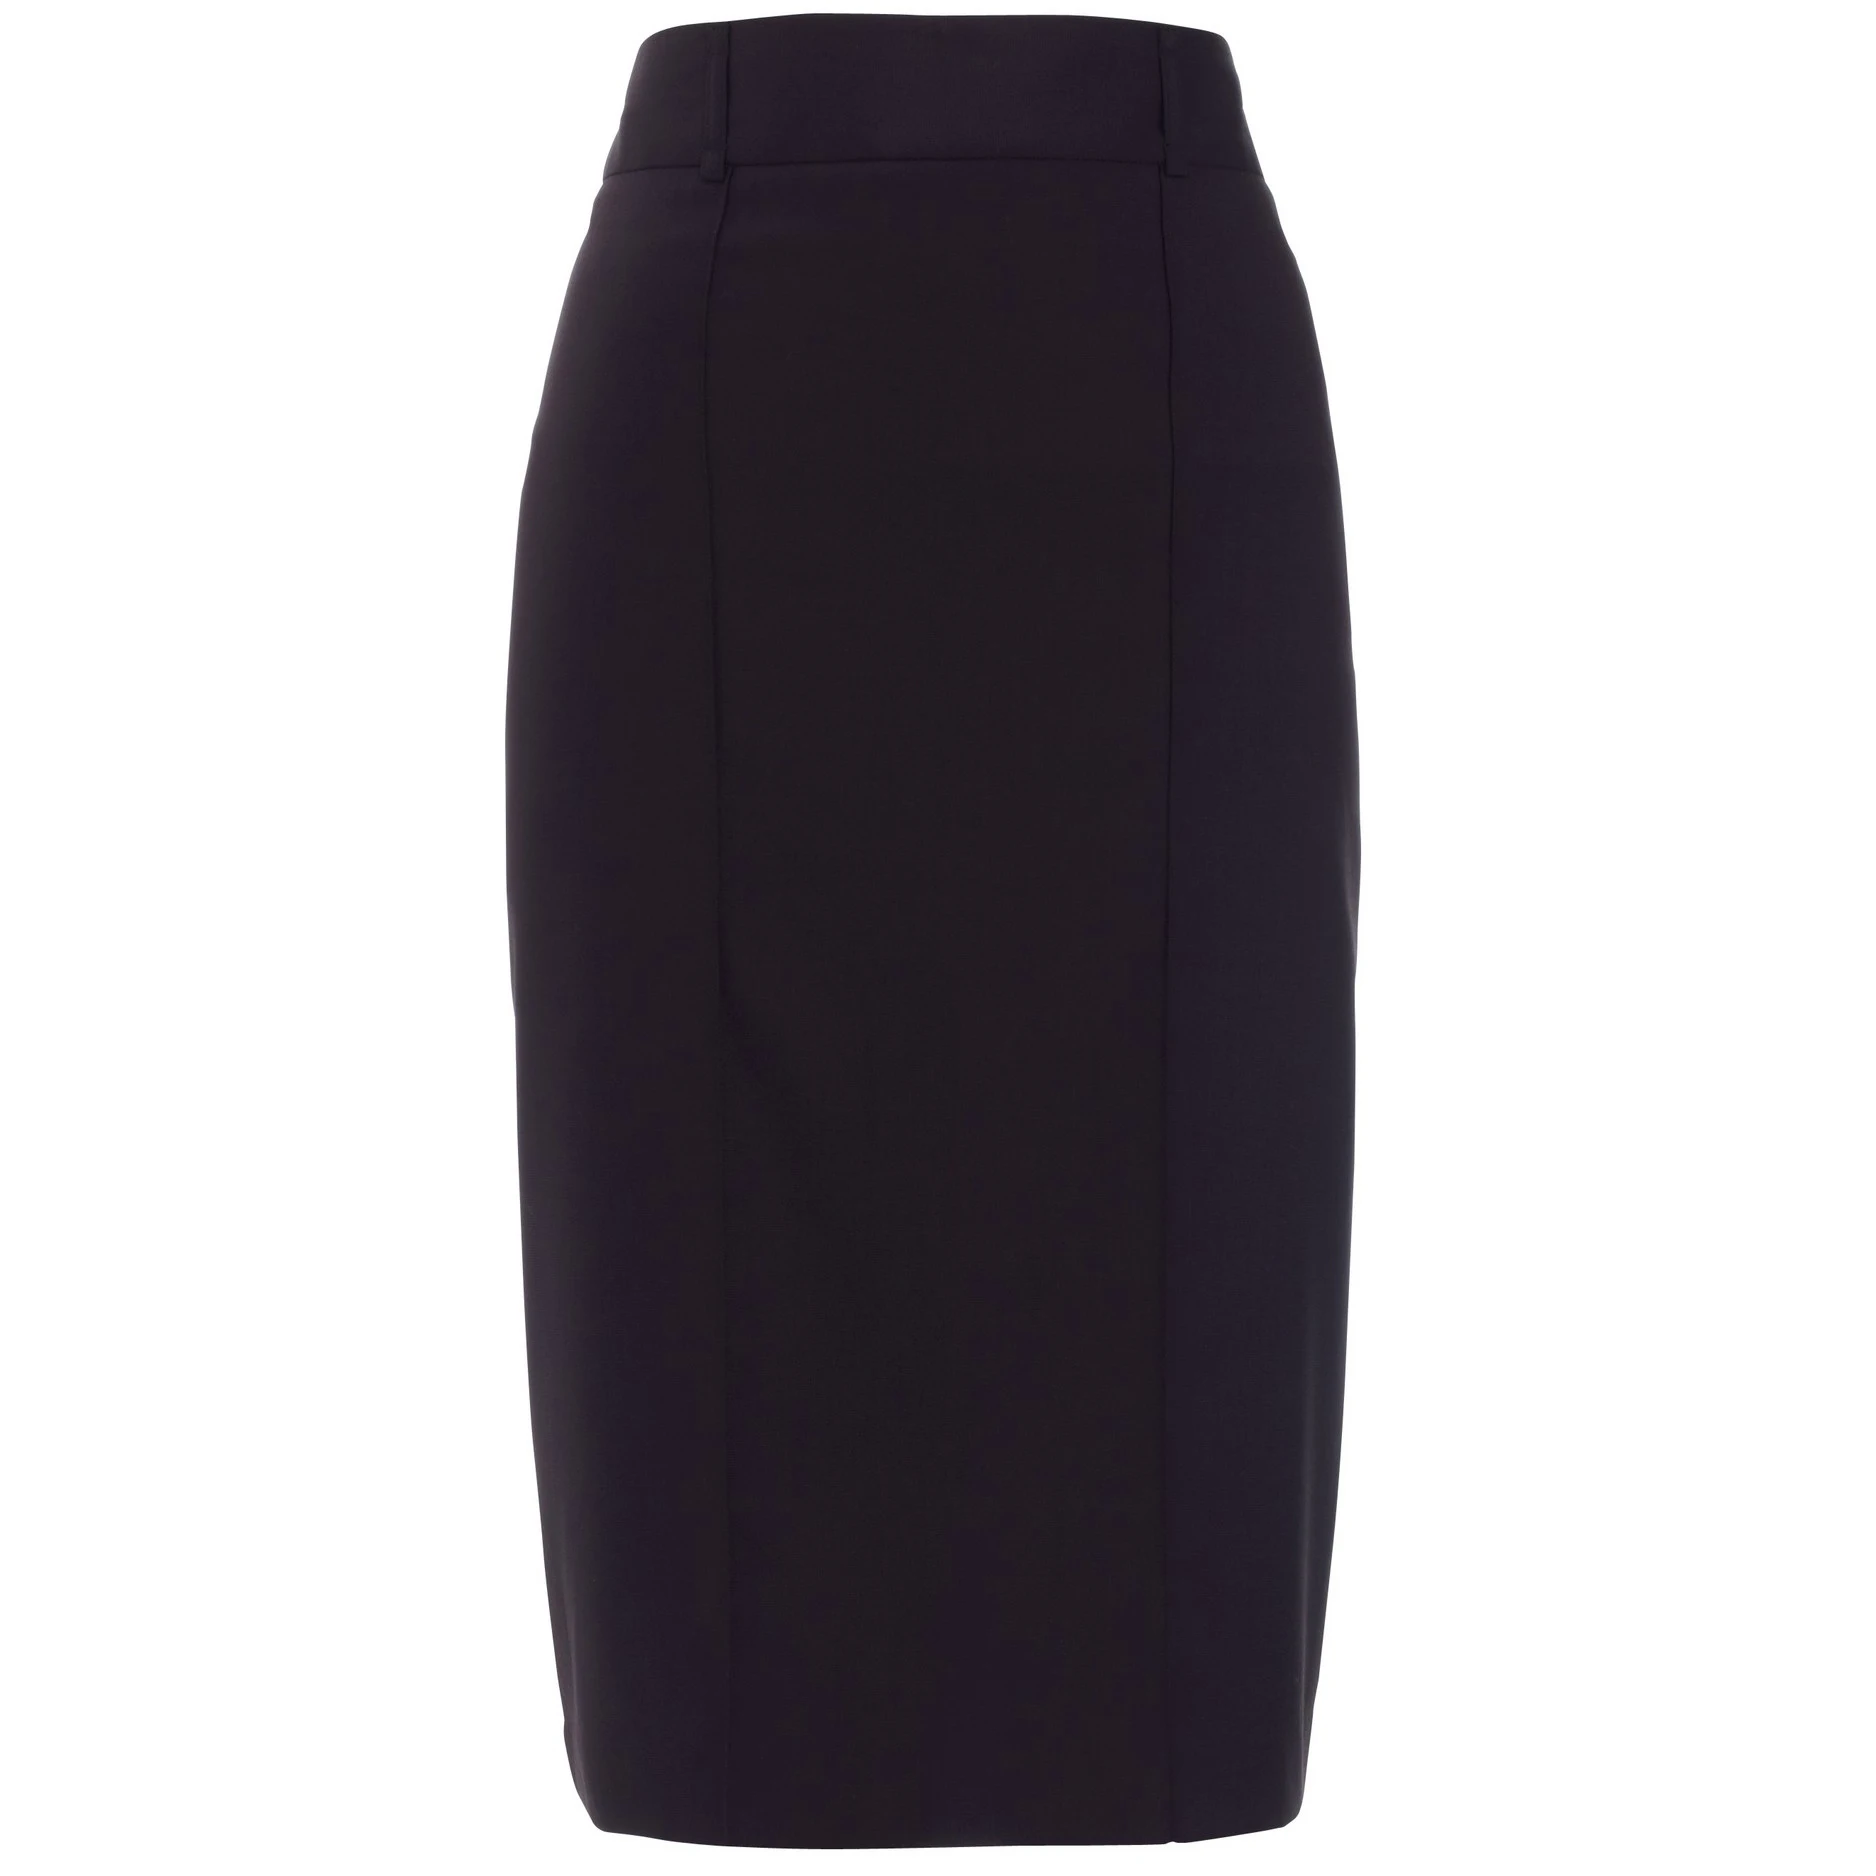 Professional Ladies Straight Formal Work Skirt - Buy Black Formal Skirt ...